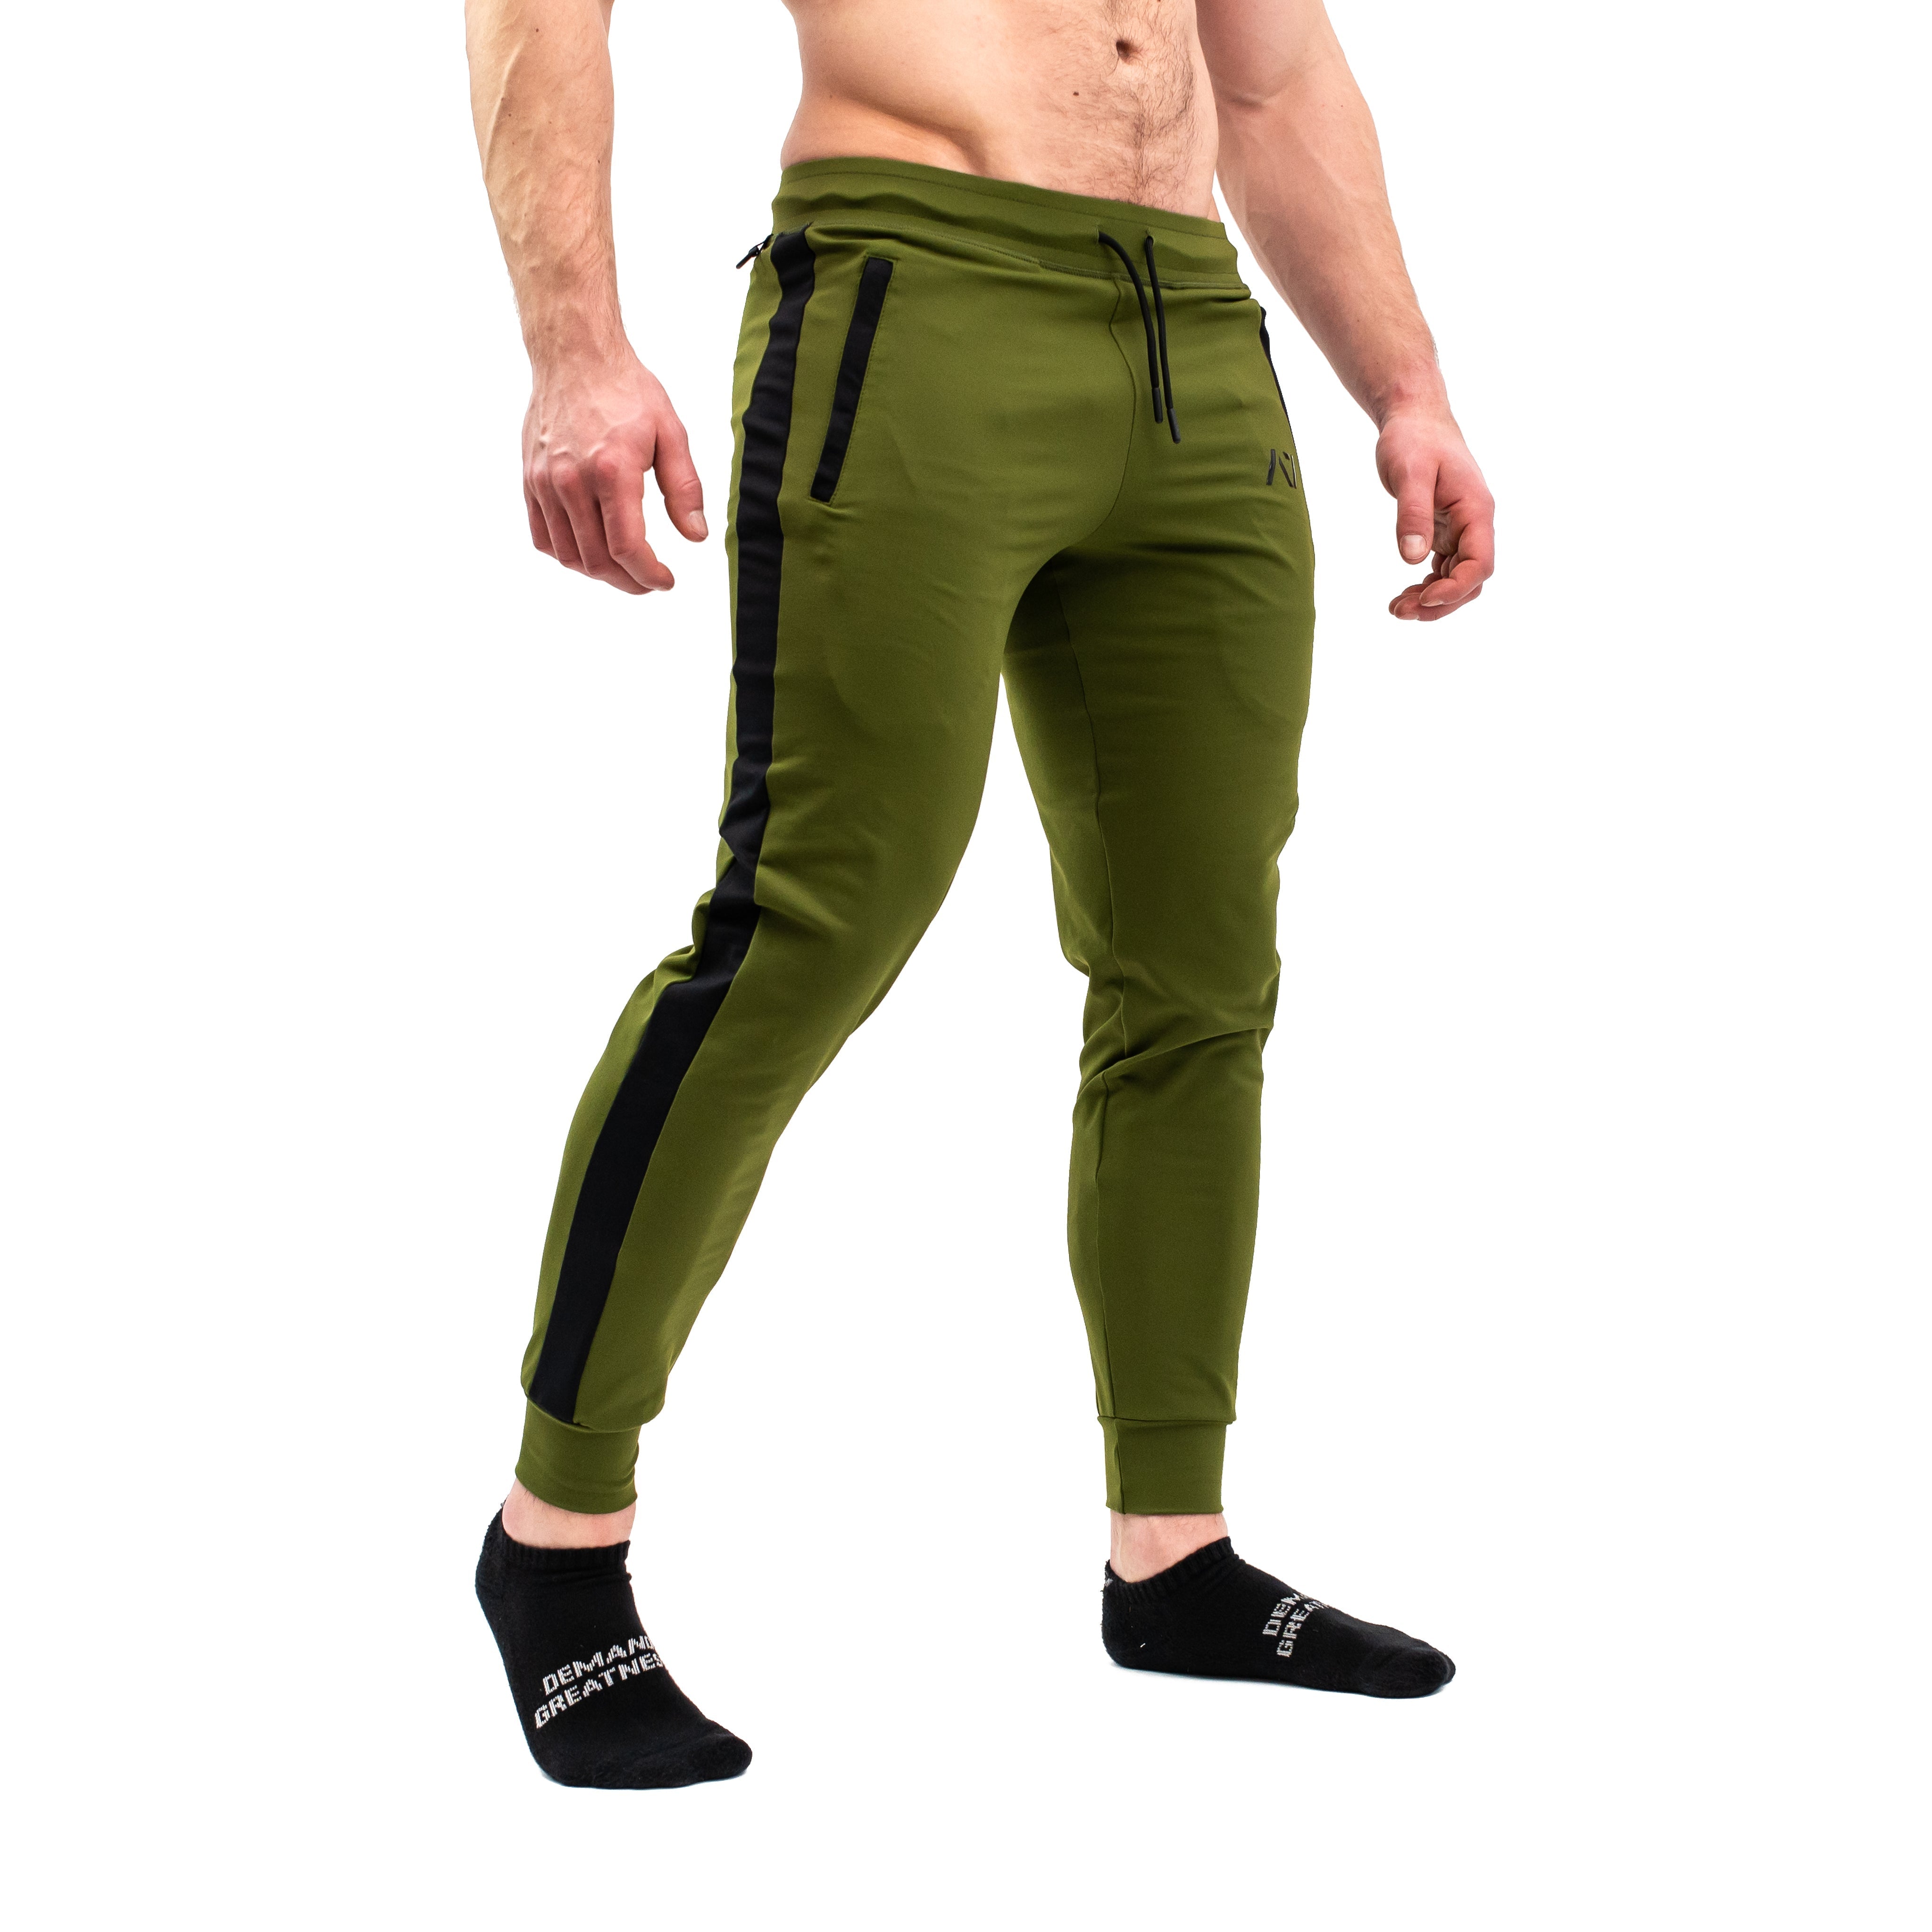 Darc Sport Men's Sacrifice Windbreaker Activewear Track Pants | eBay